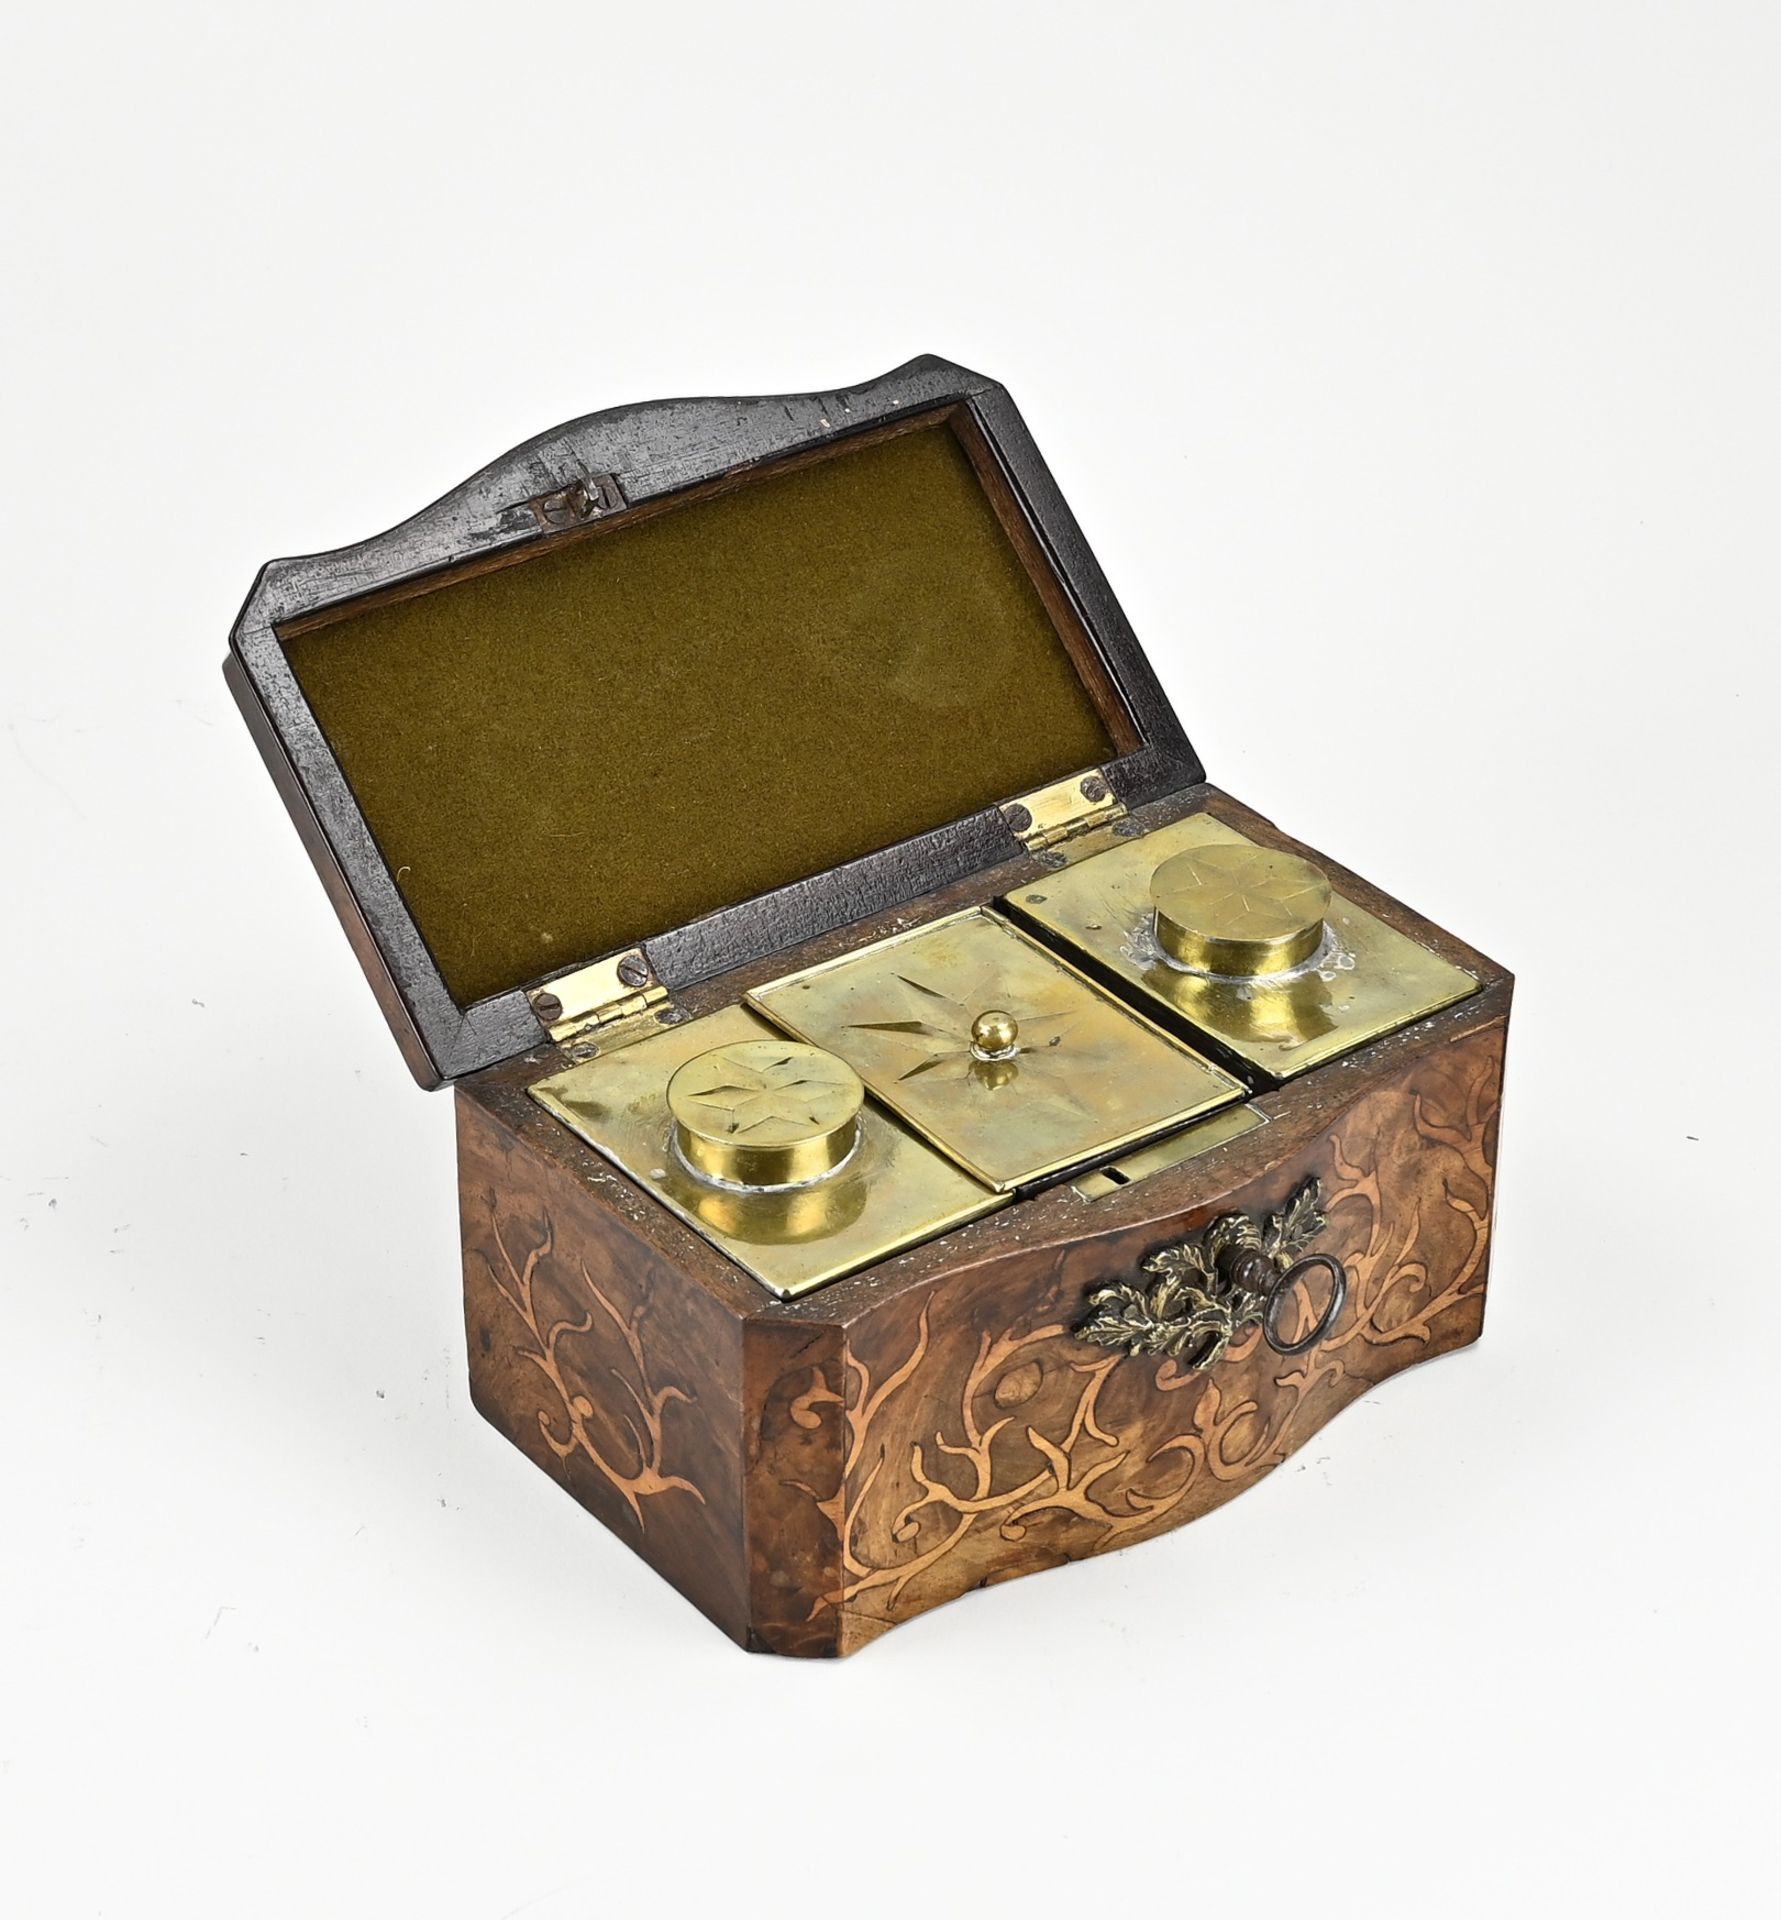 Rare 18th century tea box - Image 2 of 2